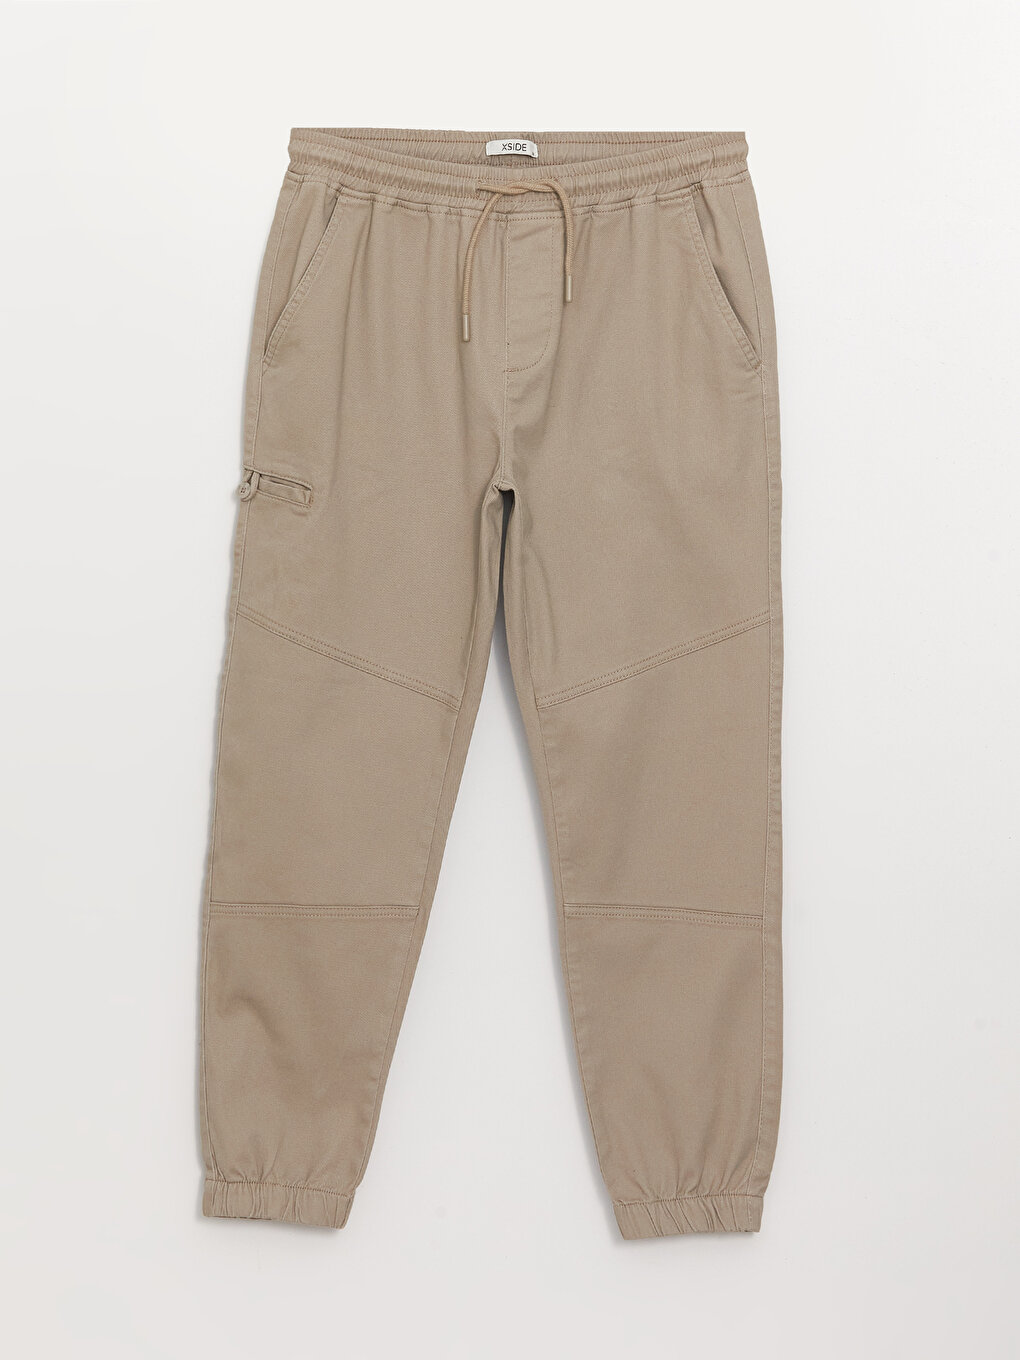 Slim Fit Gabardine Men's Trousers -S41012Z8-V38 - S41012Z8-V38 